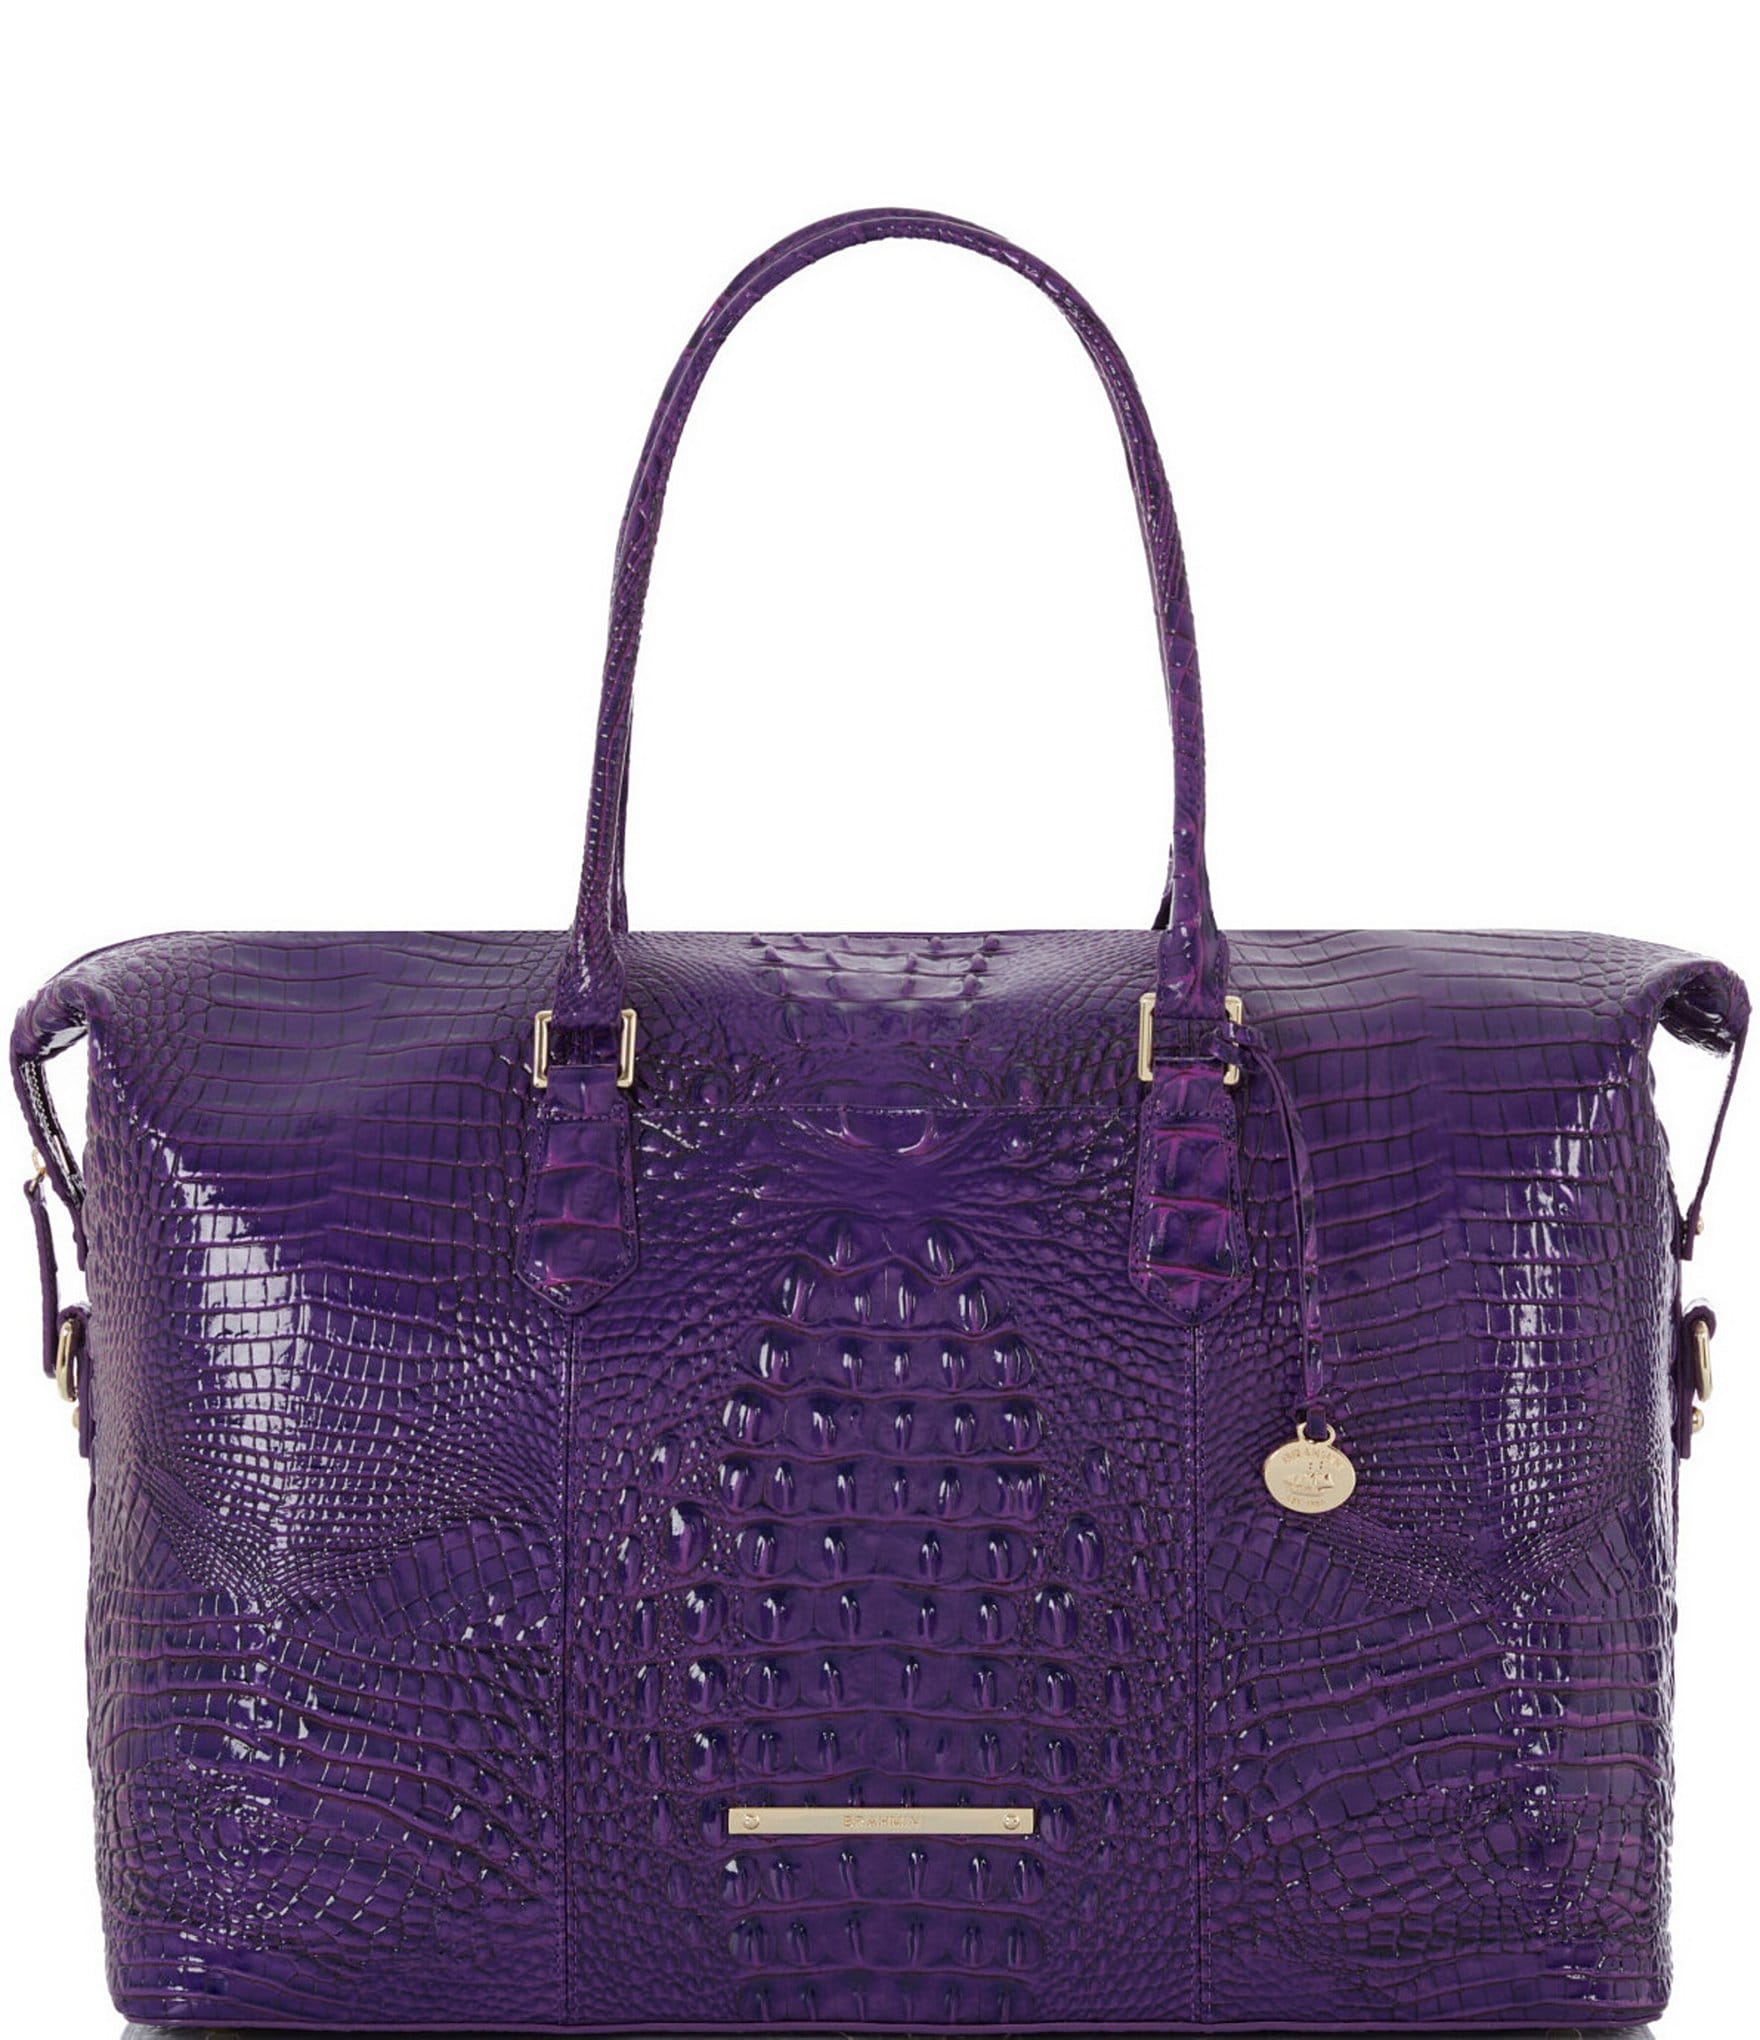 Floral Handbags, Purses & Wallets | Dillard's